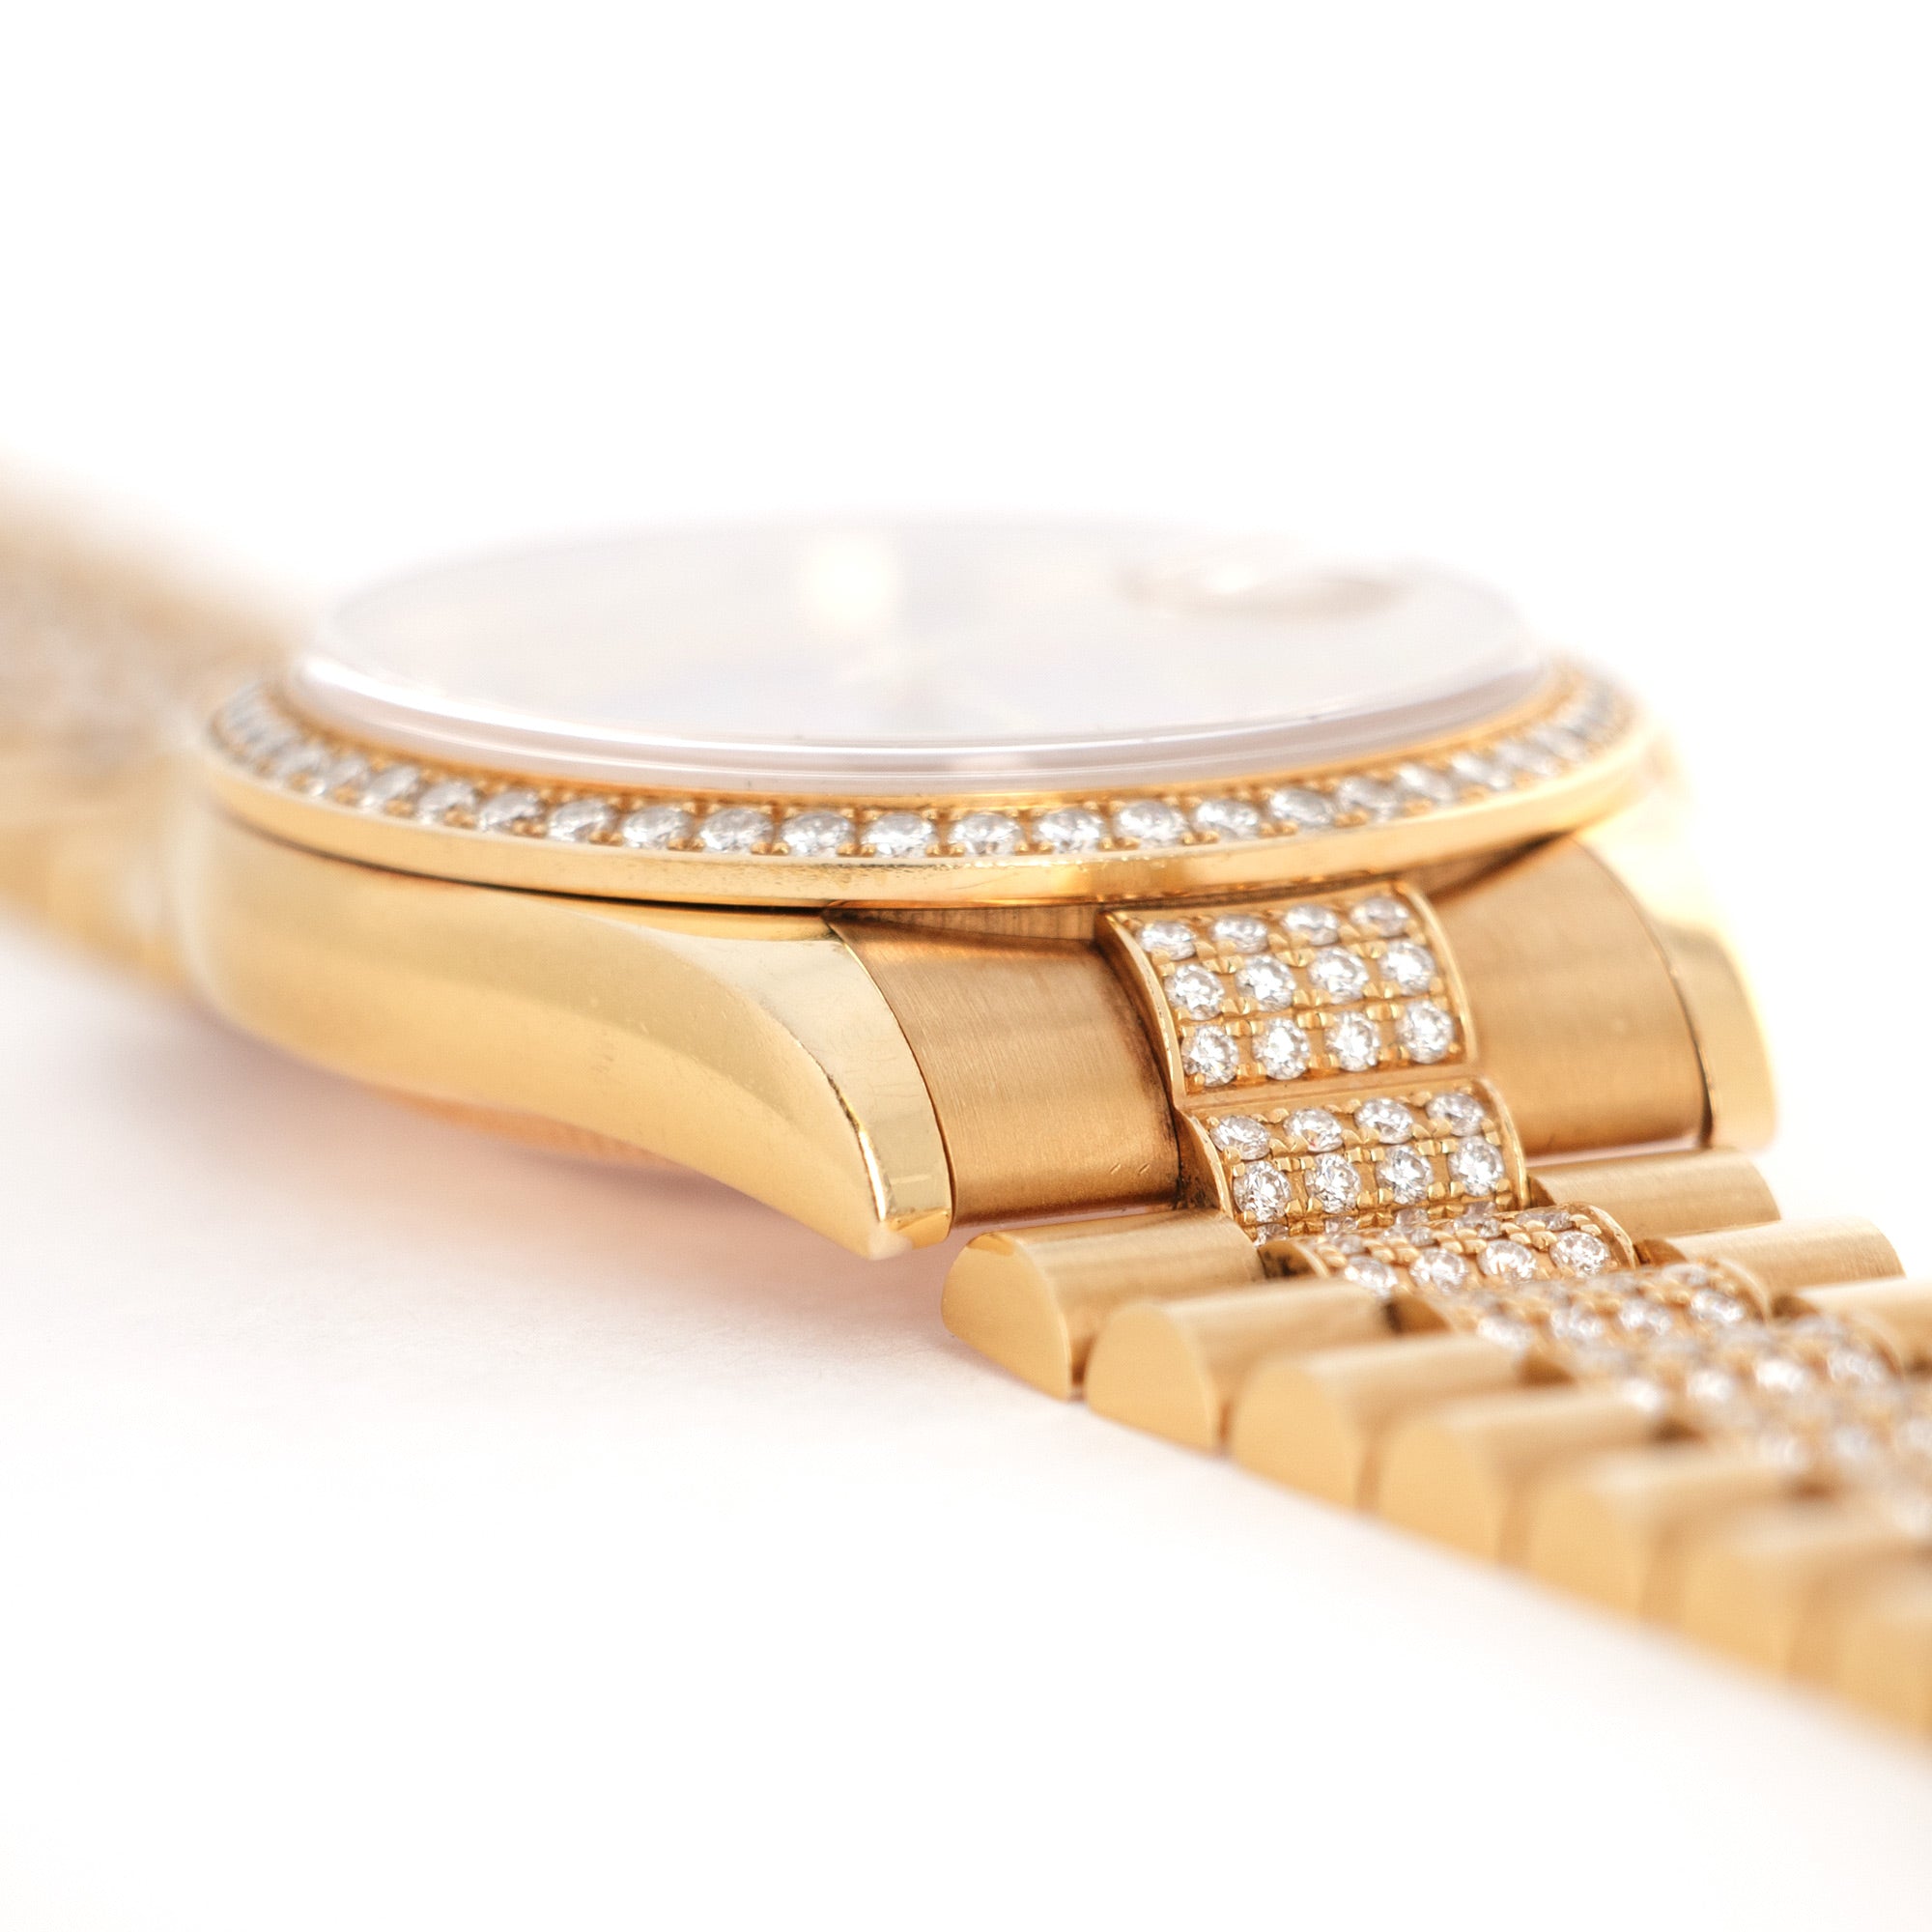 Rolex - Rolex Yellow Gold Day-Date Pave Diamond Watch Ref. 118348 - The Keystone Watches